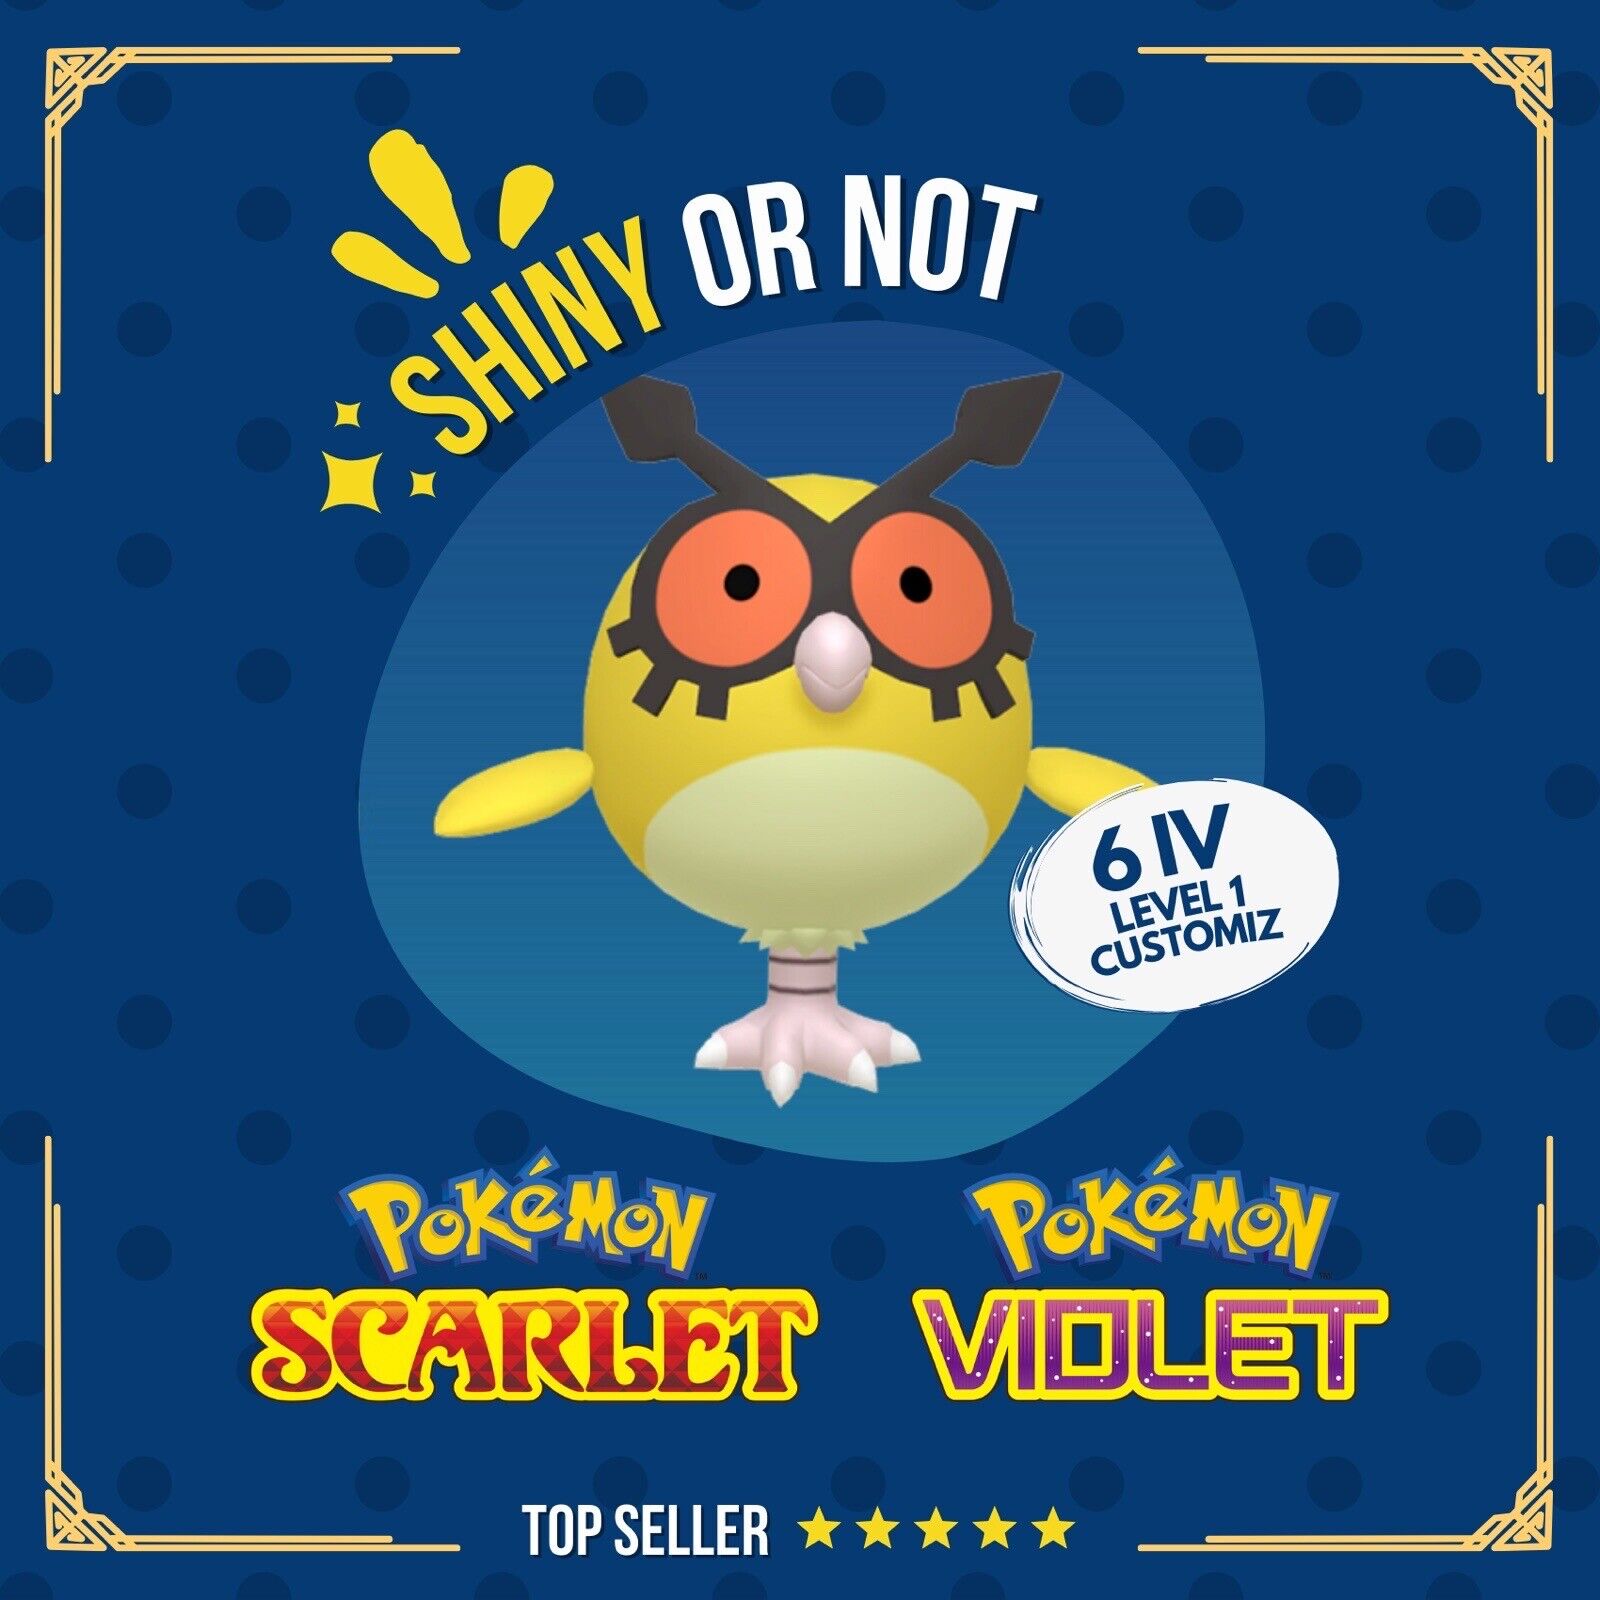 Hoothoot Shiny or Non ✨ 6 IV Customizable Nature Level OT Pokémon Scarlet Violet by Shiny Living Dex | Shiny Living Dex